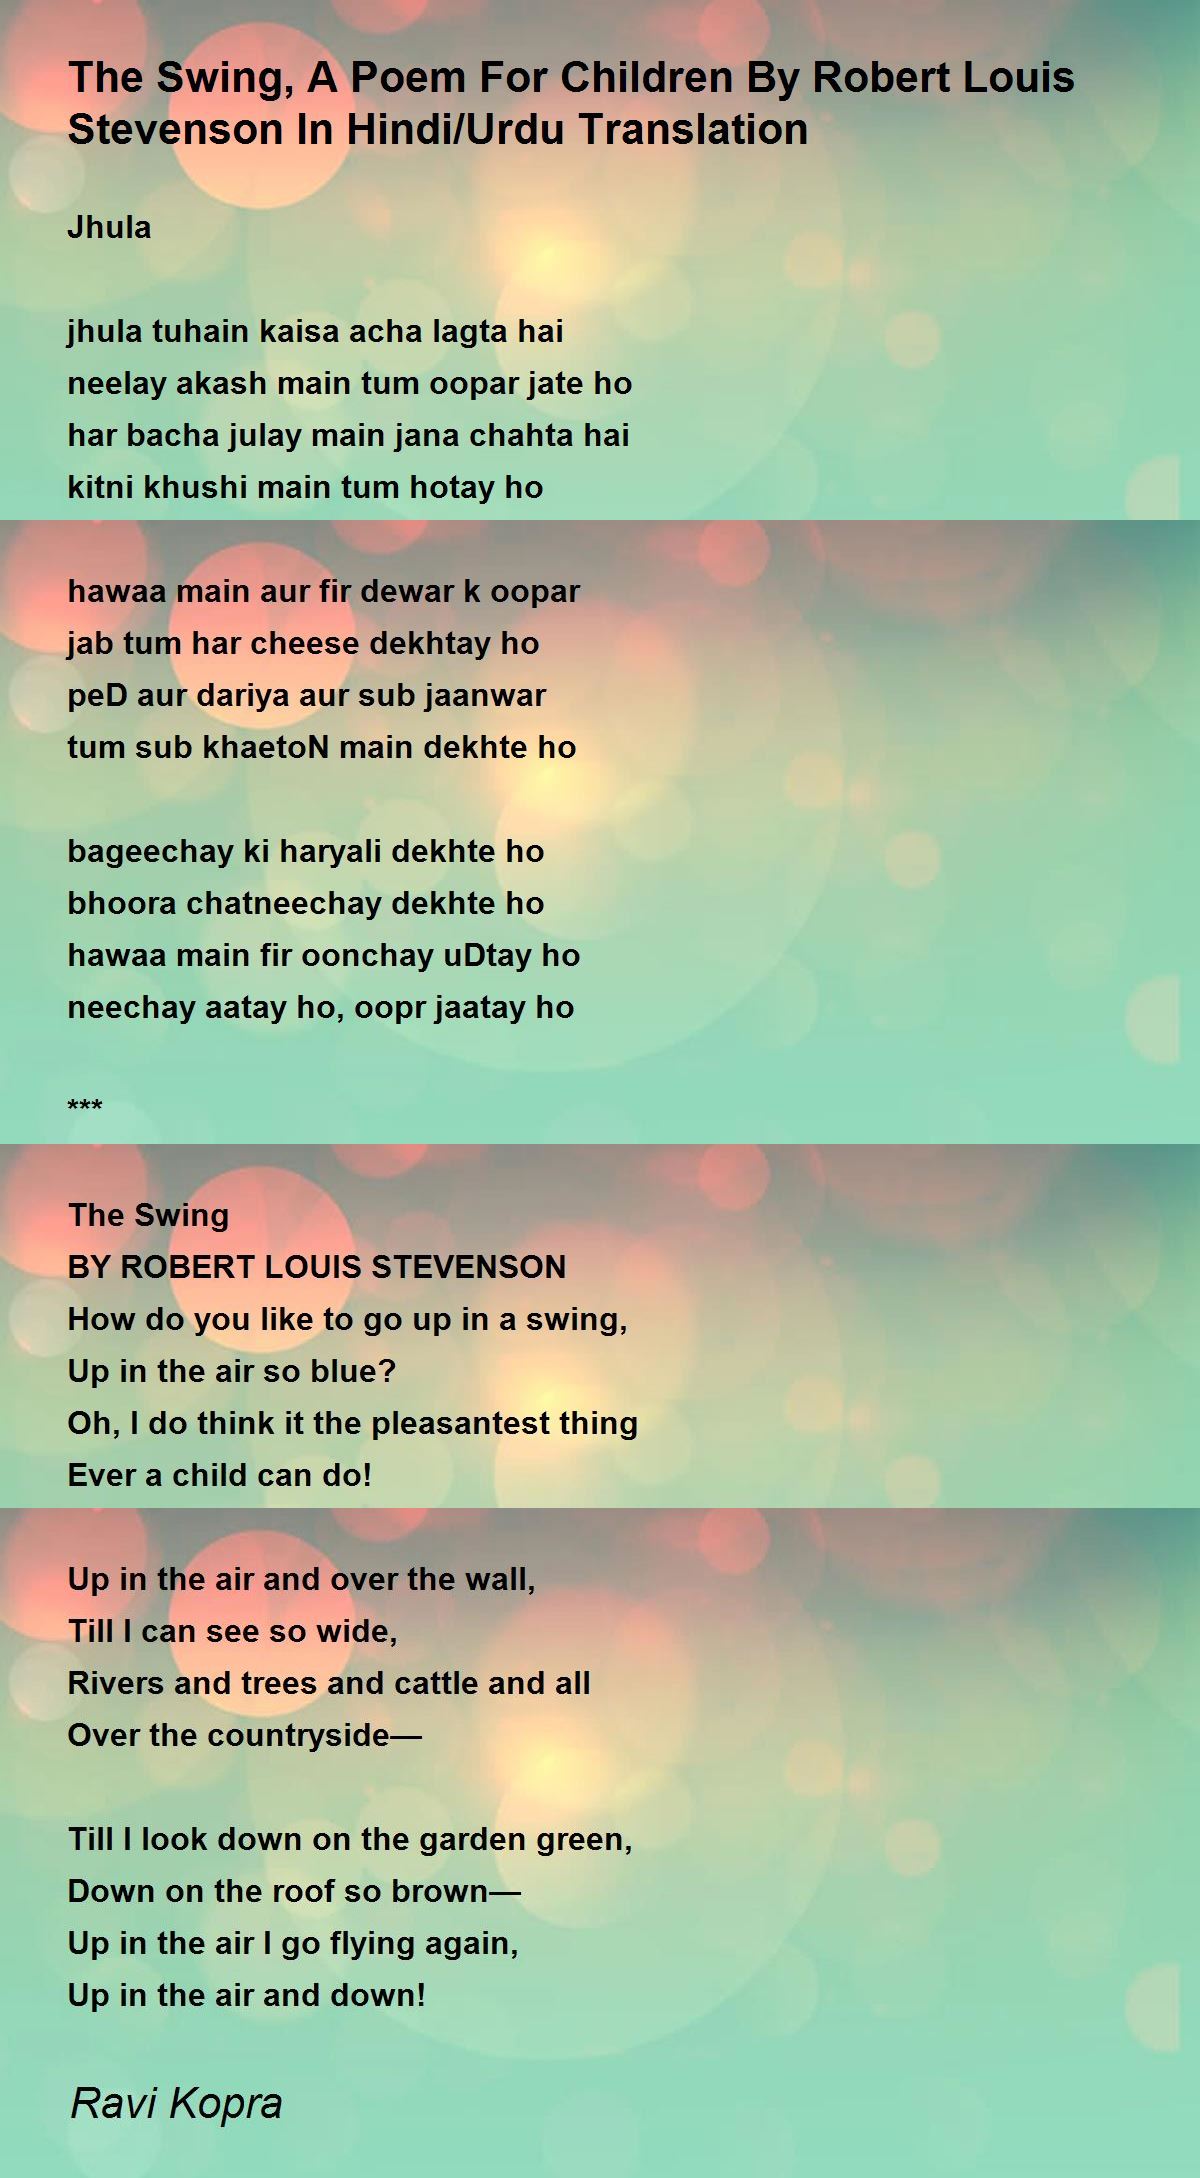 The Swing A Poem For Children By Robert Louis Stevenson In Hindi Urdu Translation By Ravi Kopra The Swing A Poem For Children By Robert Louis Stevenson In Hindi Urdu Translation Poem